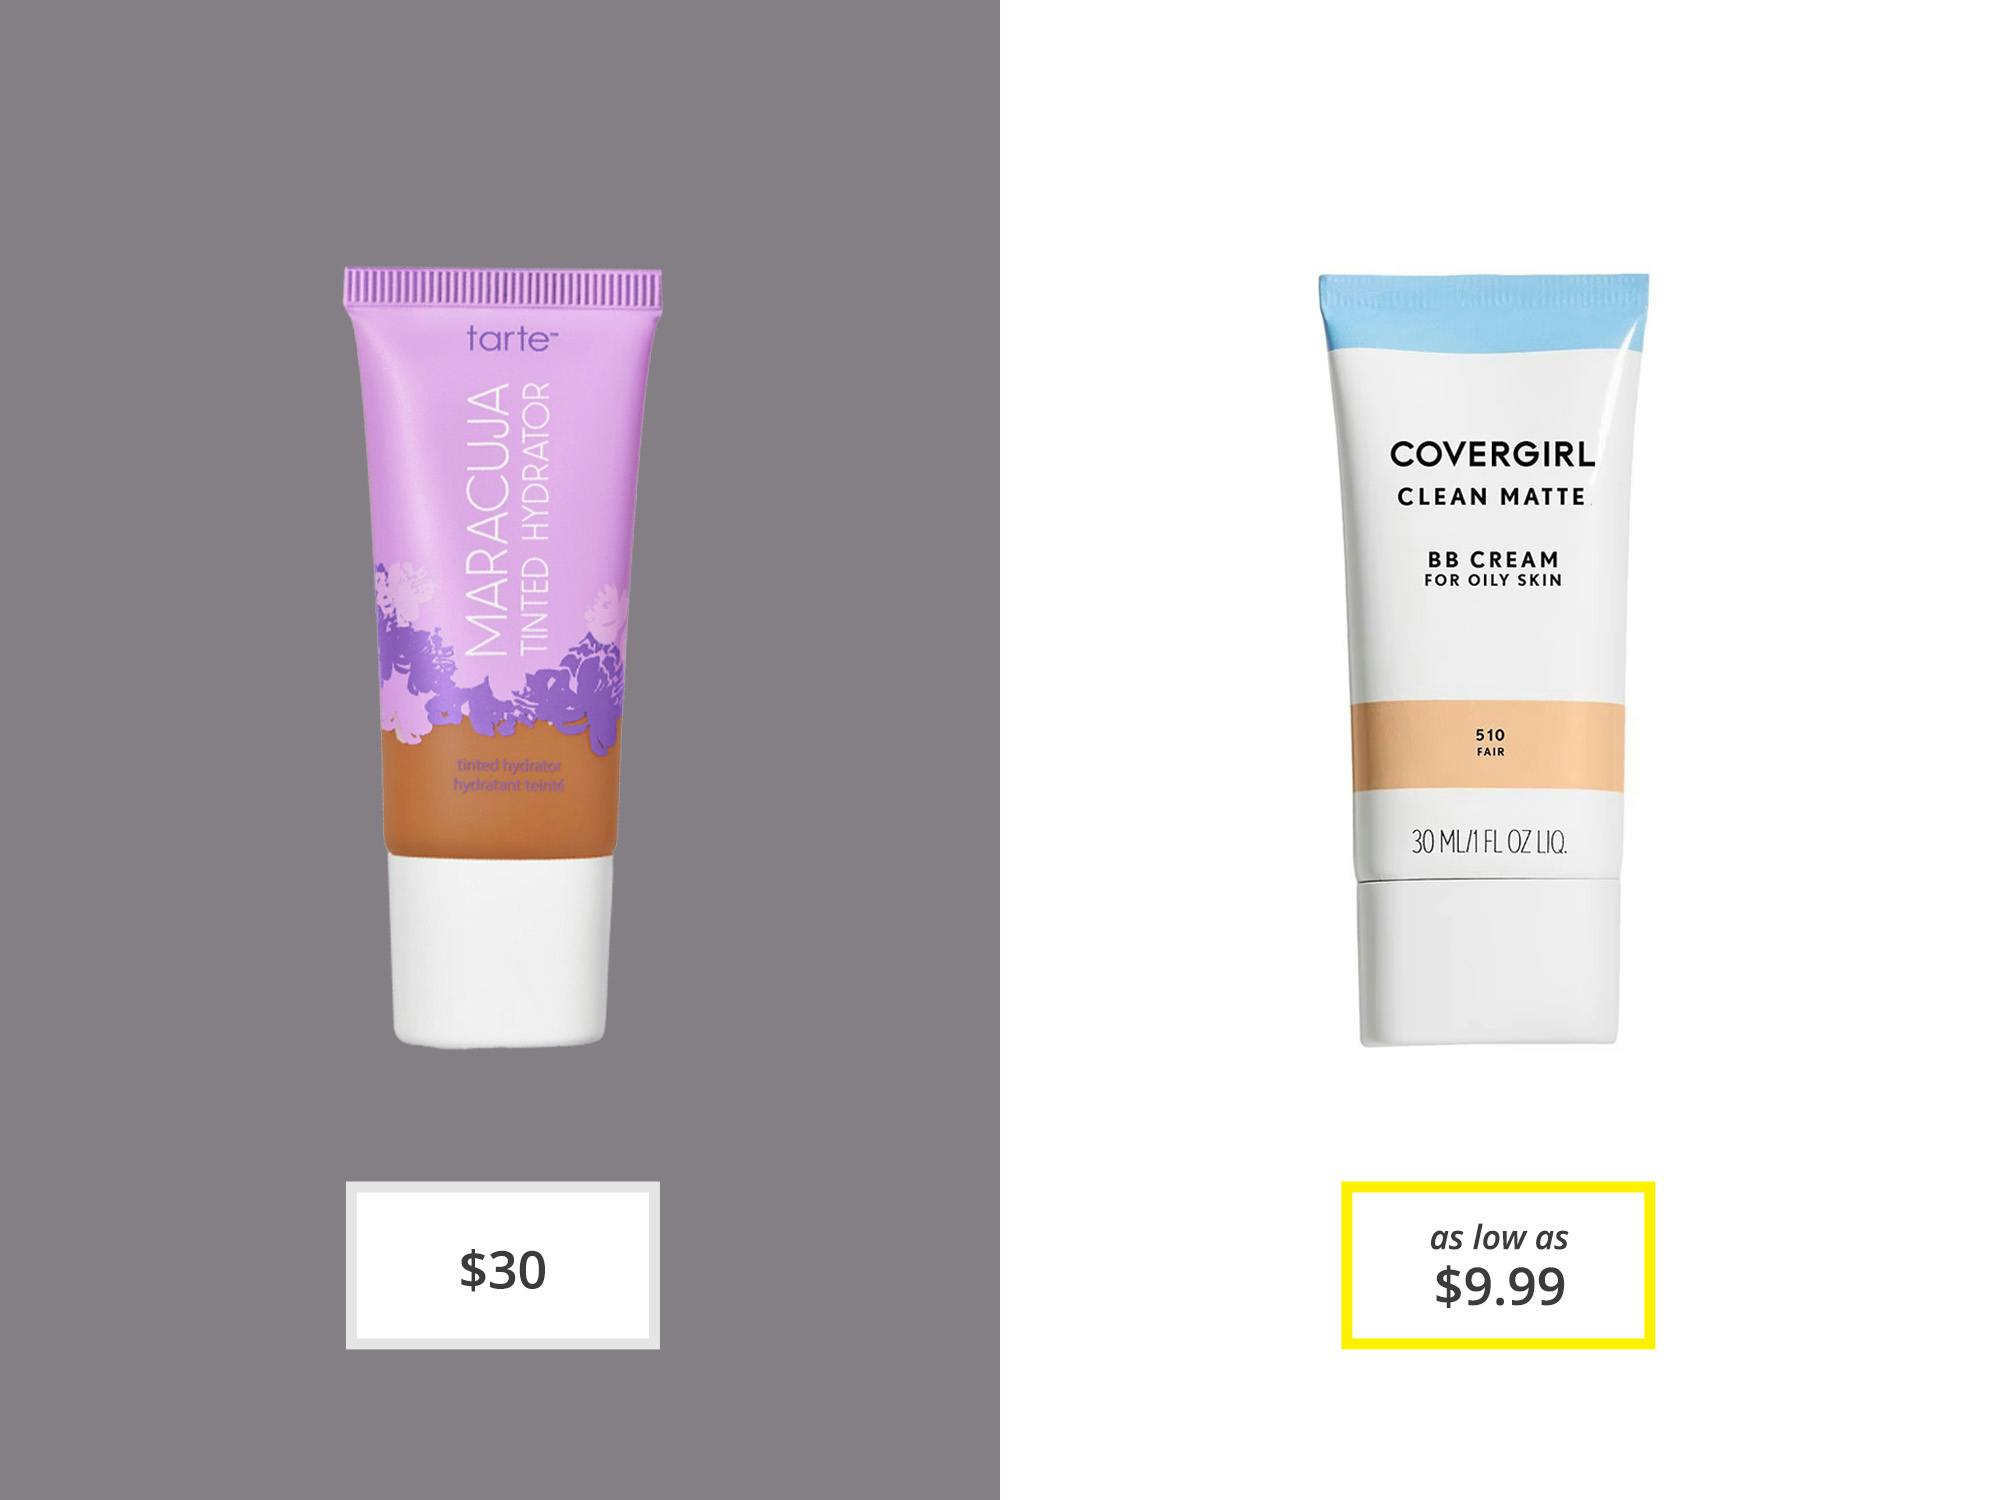 CoverGirl Clean Matte BB Cream ($9.99) vs. Maracuja Tinted Moisturizer ($30)